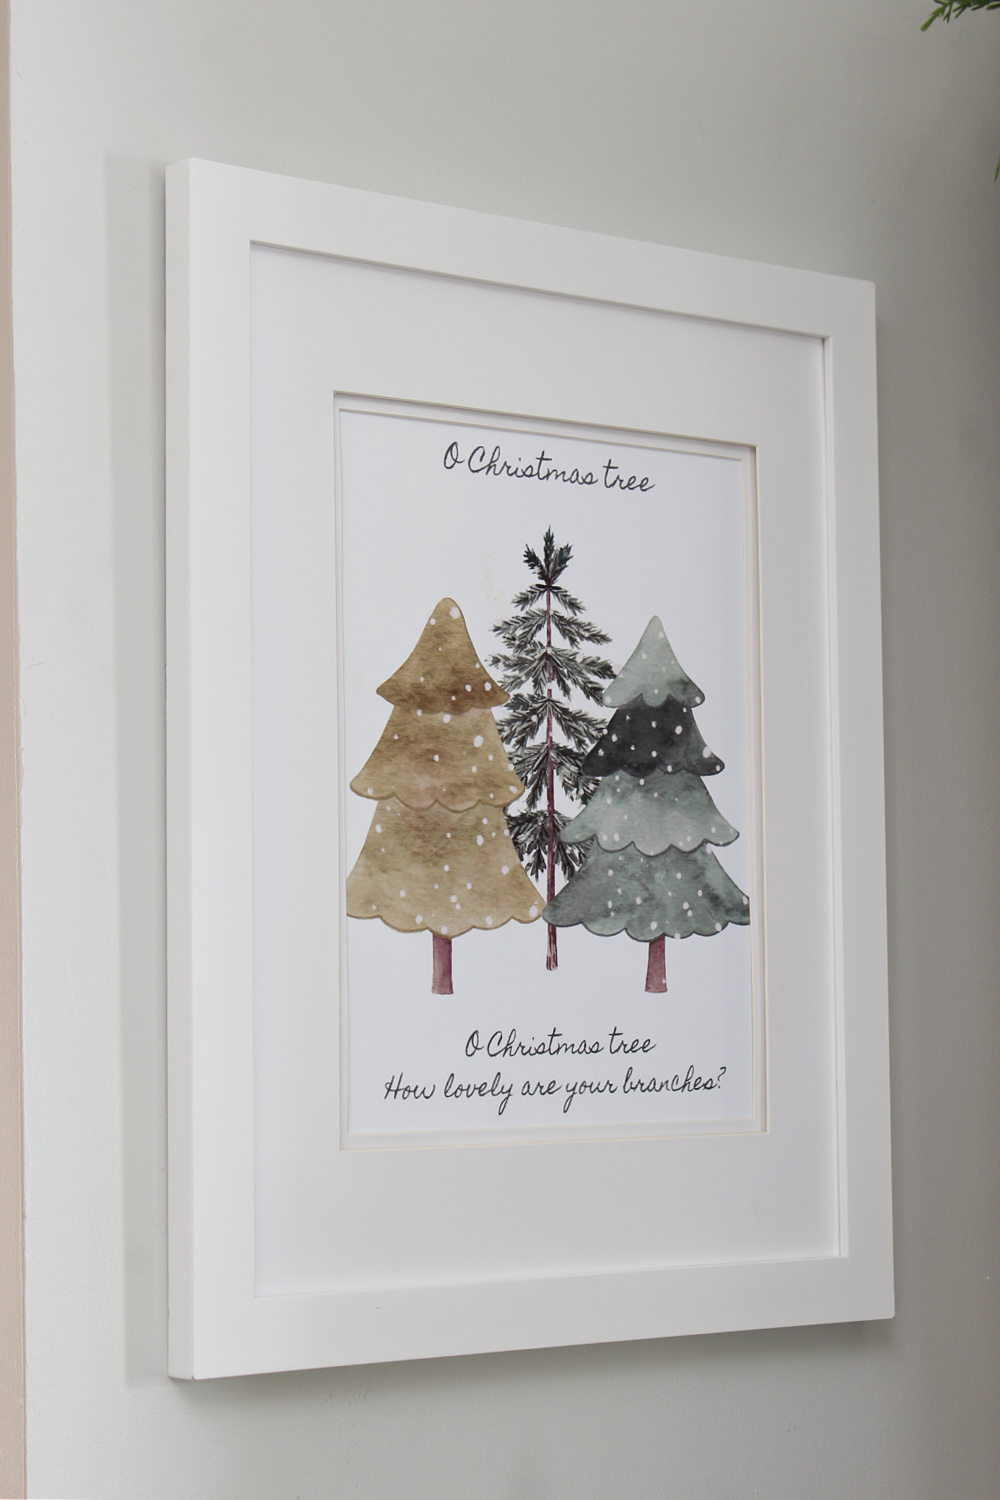 O Christmas tree hanging free xmas printable white frame.